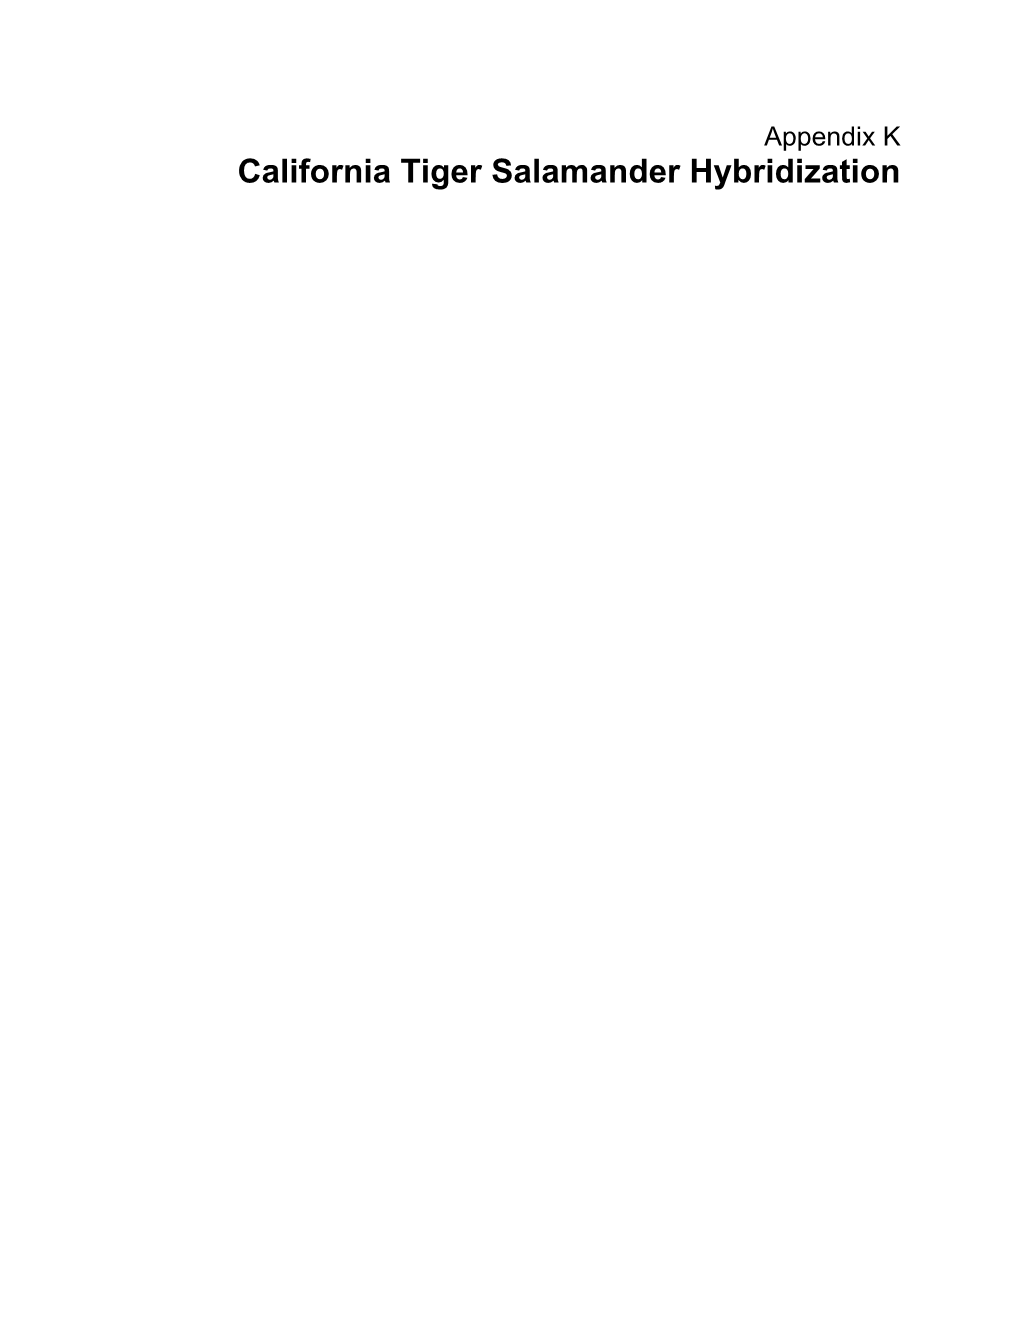 California Tiger Salamander Hybridization